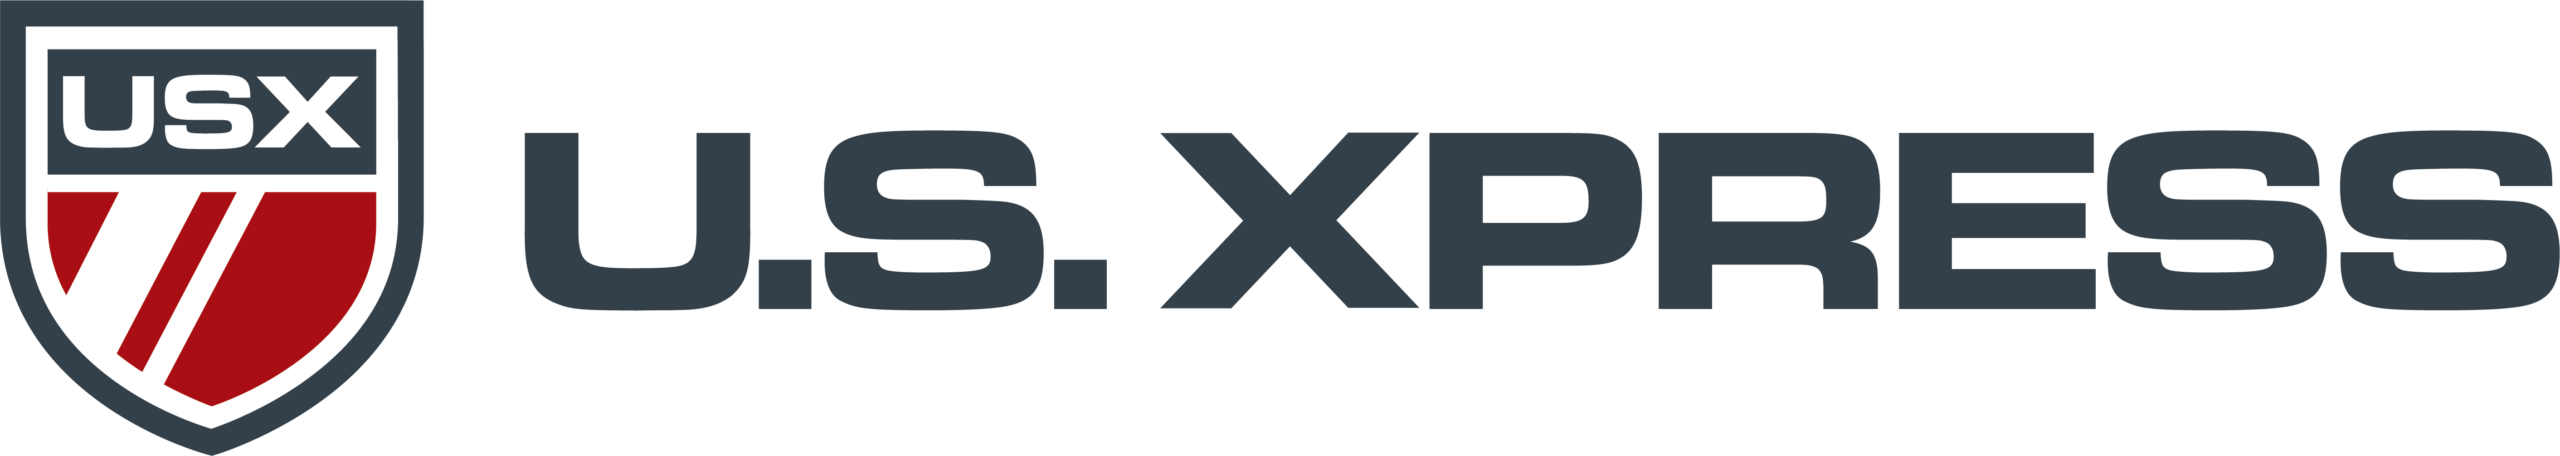 U.S. Xpress Logo CMYK 2 Color Horizontal